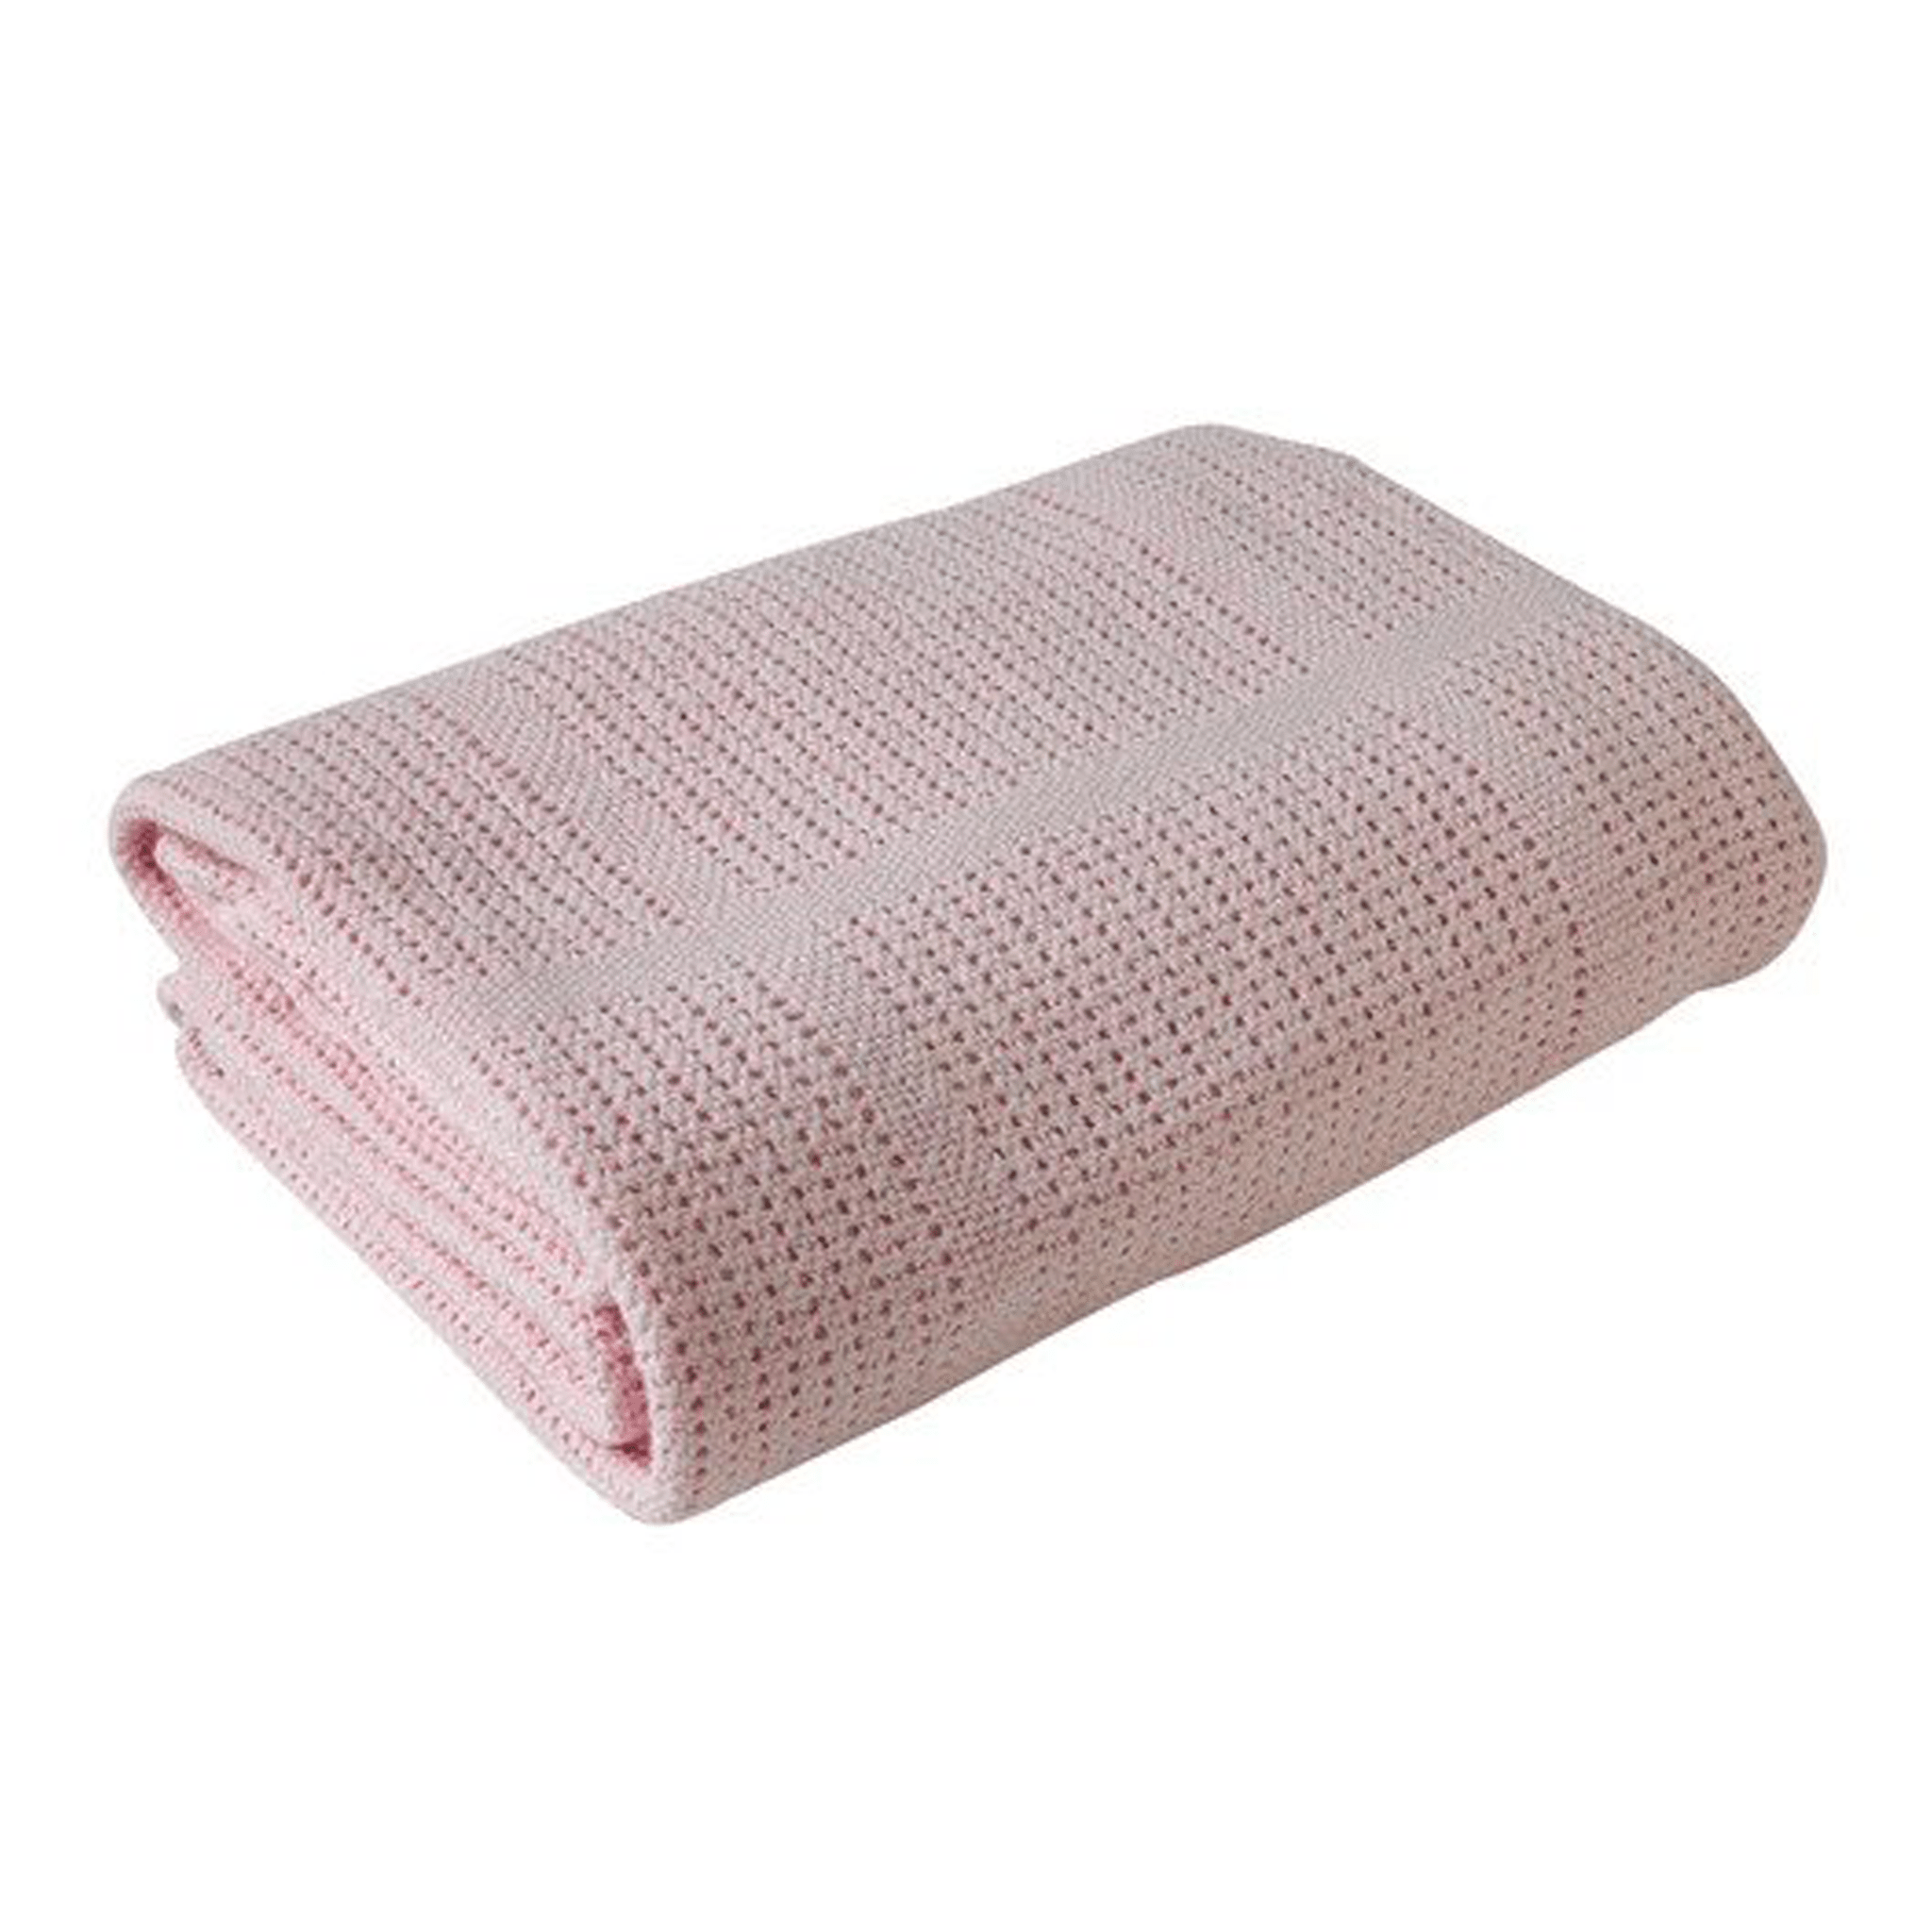 Clair De Lune Cellular Cot Blanket Pink Cot & Cot Bed Blankets CL4984p 5033775170802